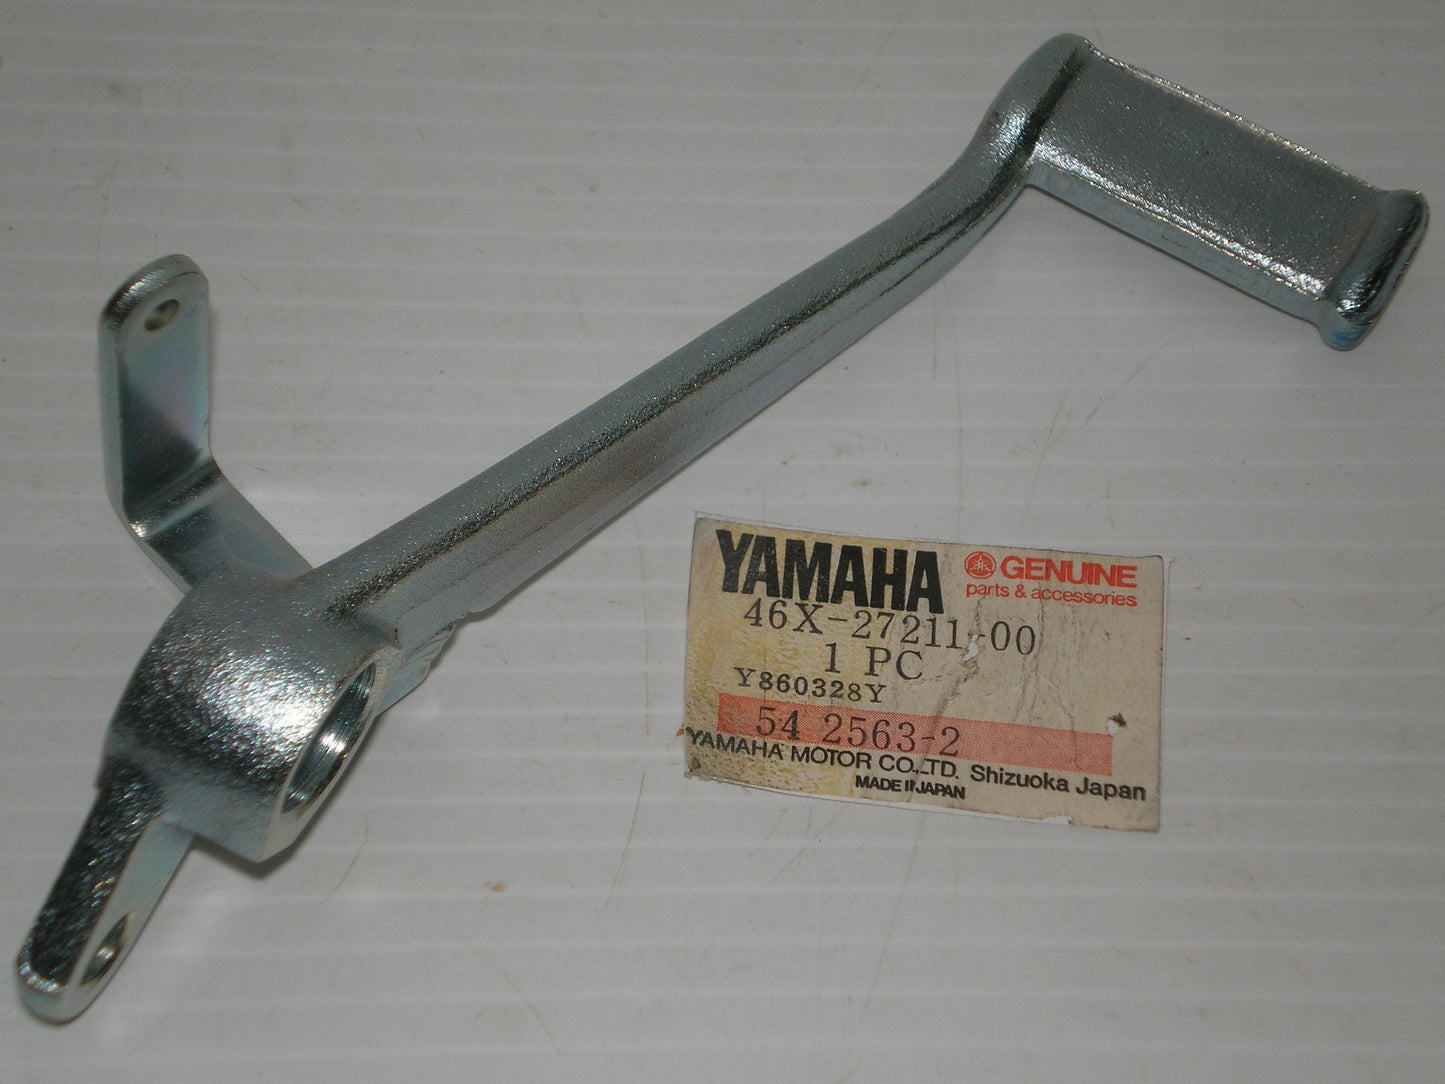 YAMAHA FZ600 1986-1988 Rear Brake Pedal 46X-27211-00